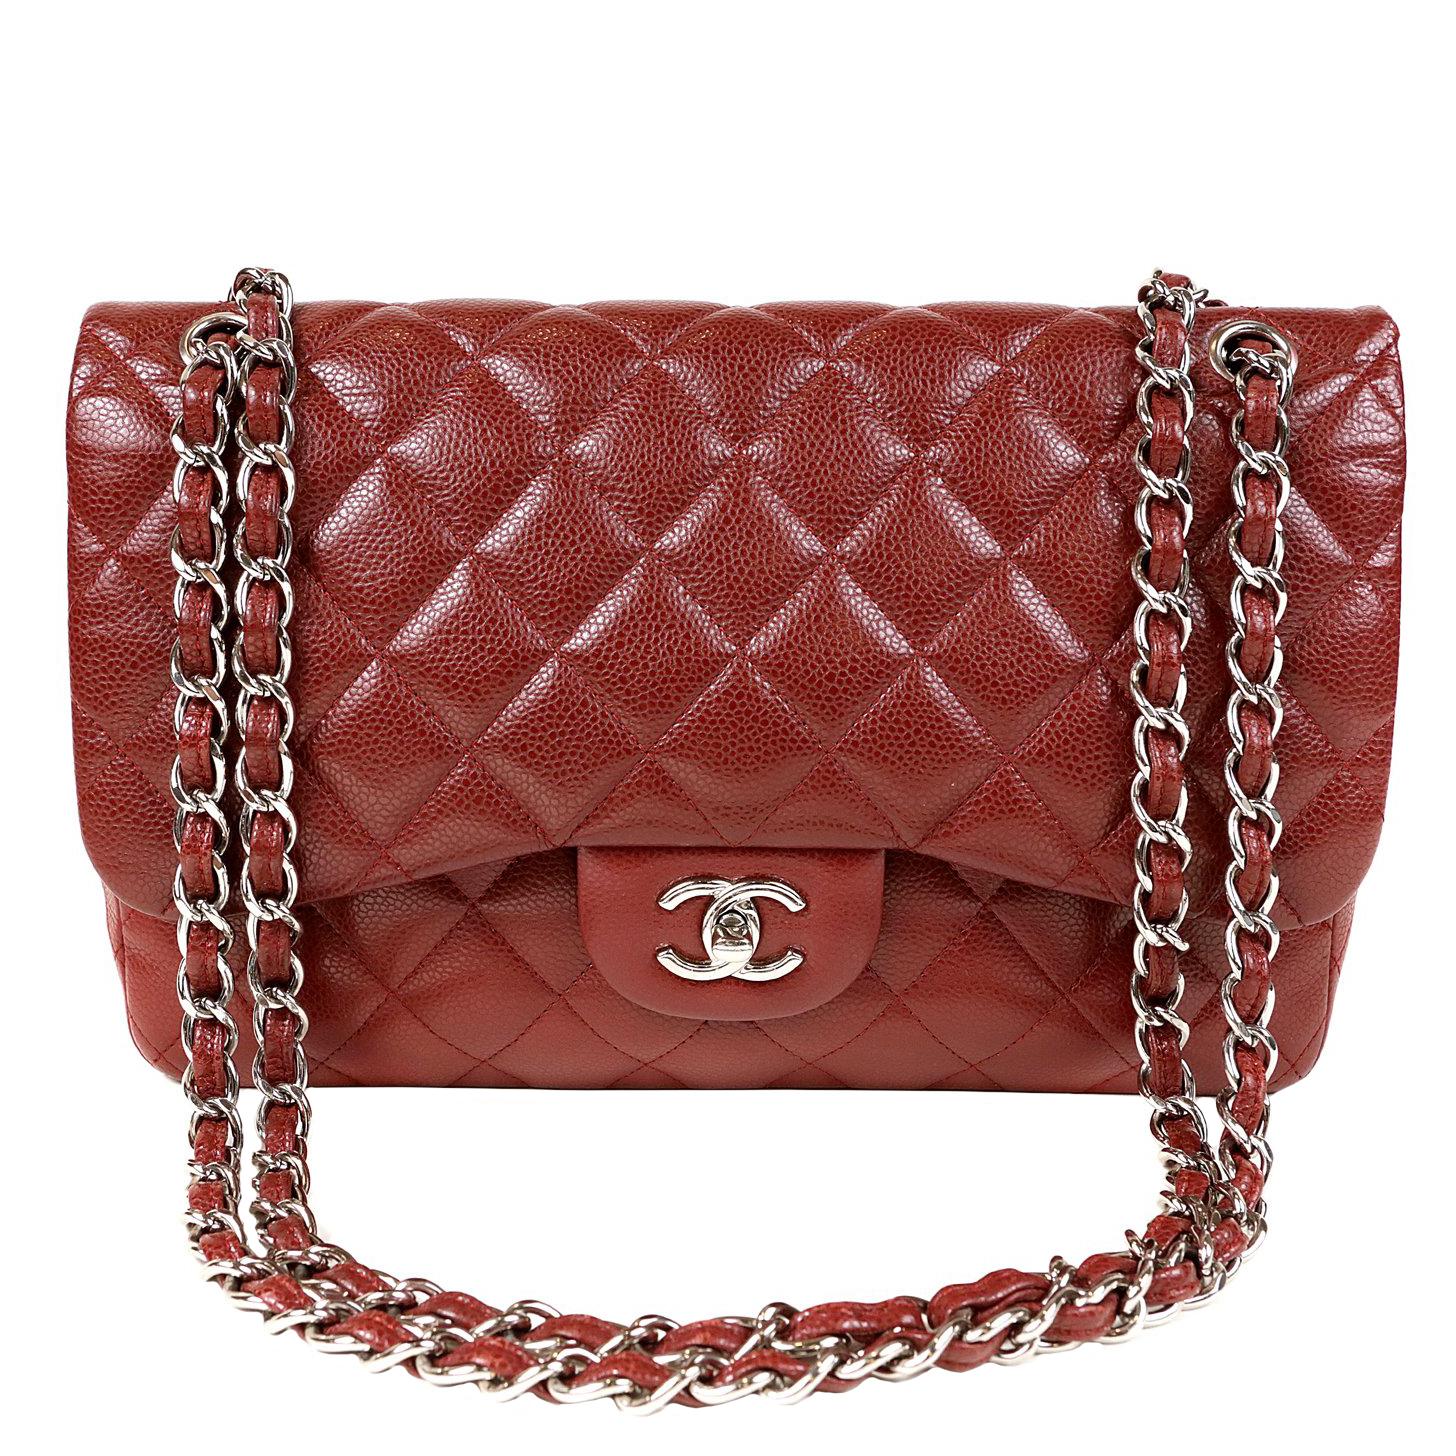 Chanel Red Caviar Jumbo Classic Flap Bag